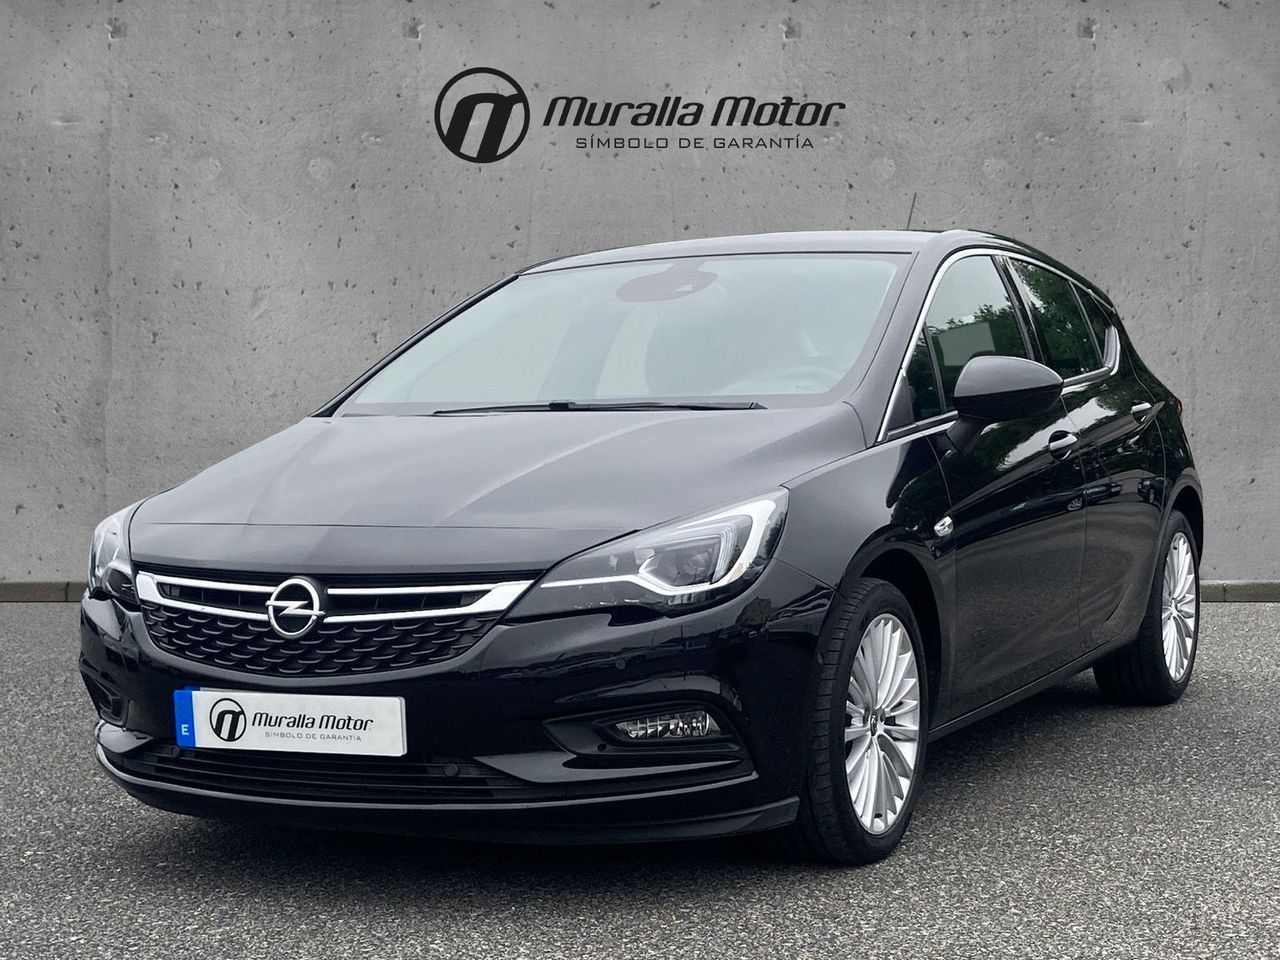 Opel Astra Excellence 1.6 CDTi SS 136cv 5p.   - Foto 1